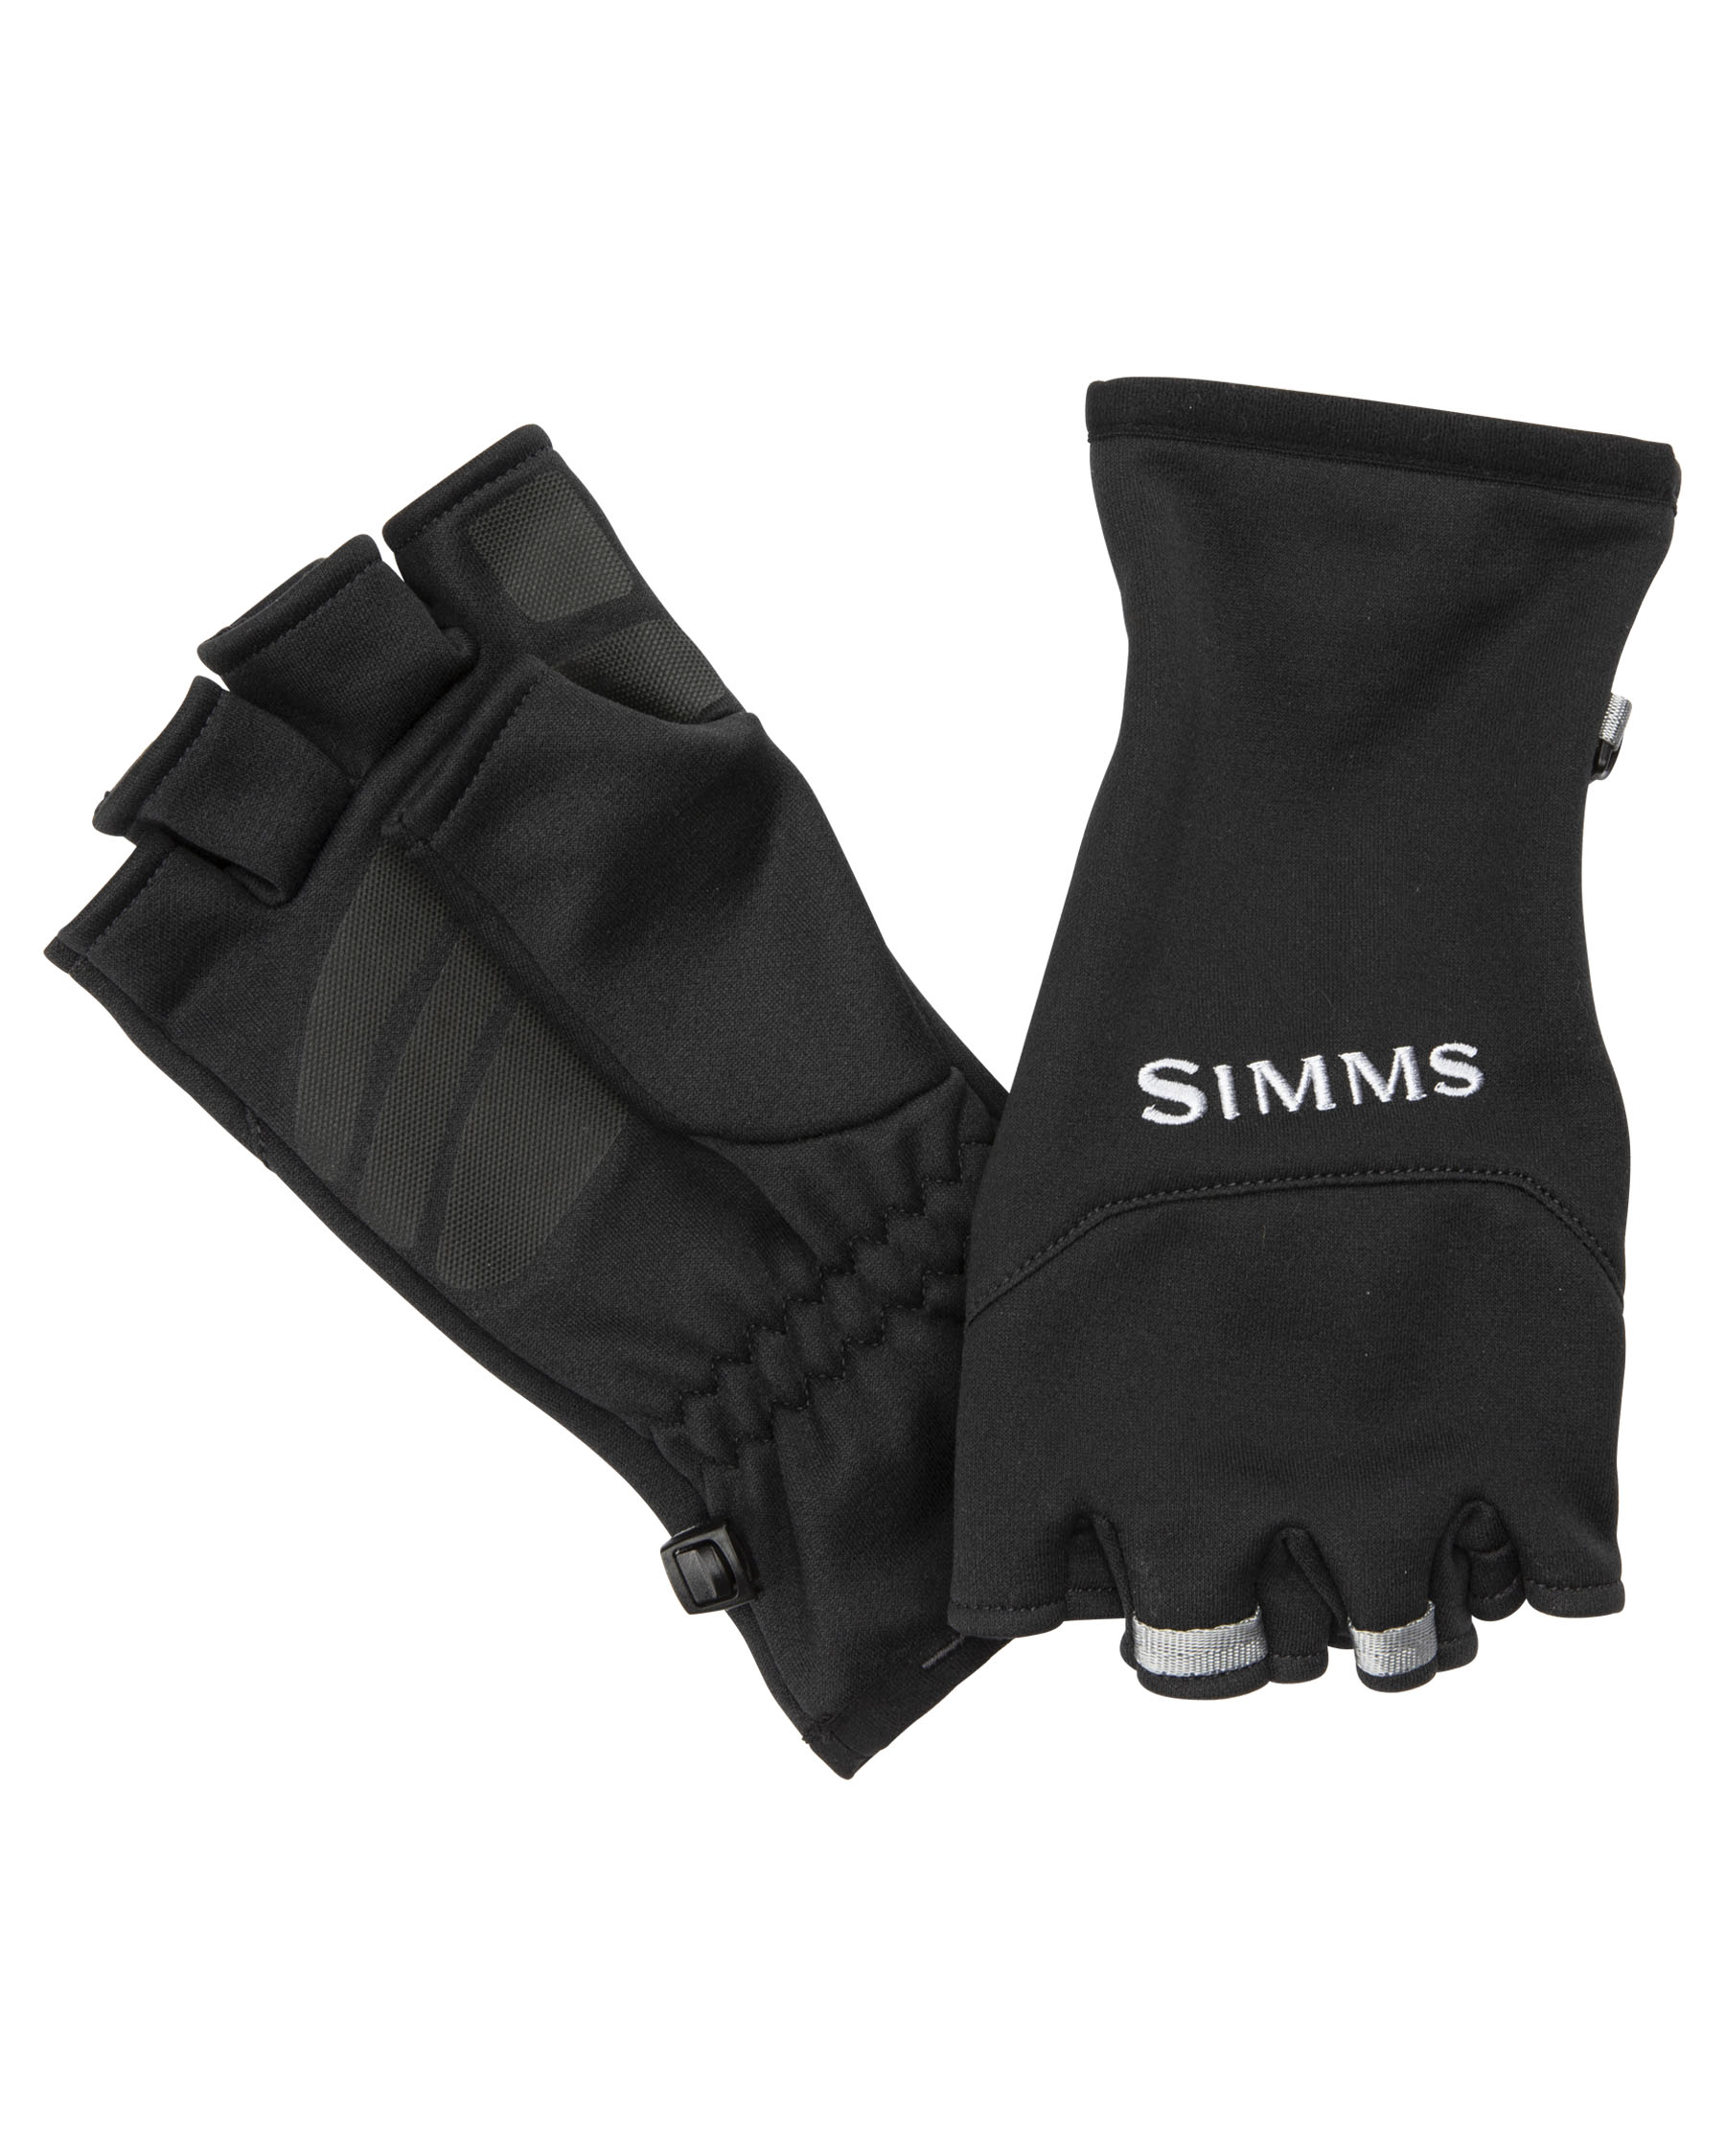 FS Half-Finger Glove | Simms | マーヴェリック / Maverick